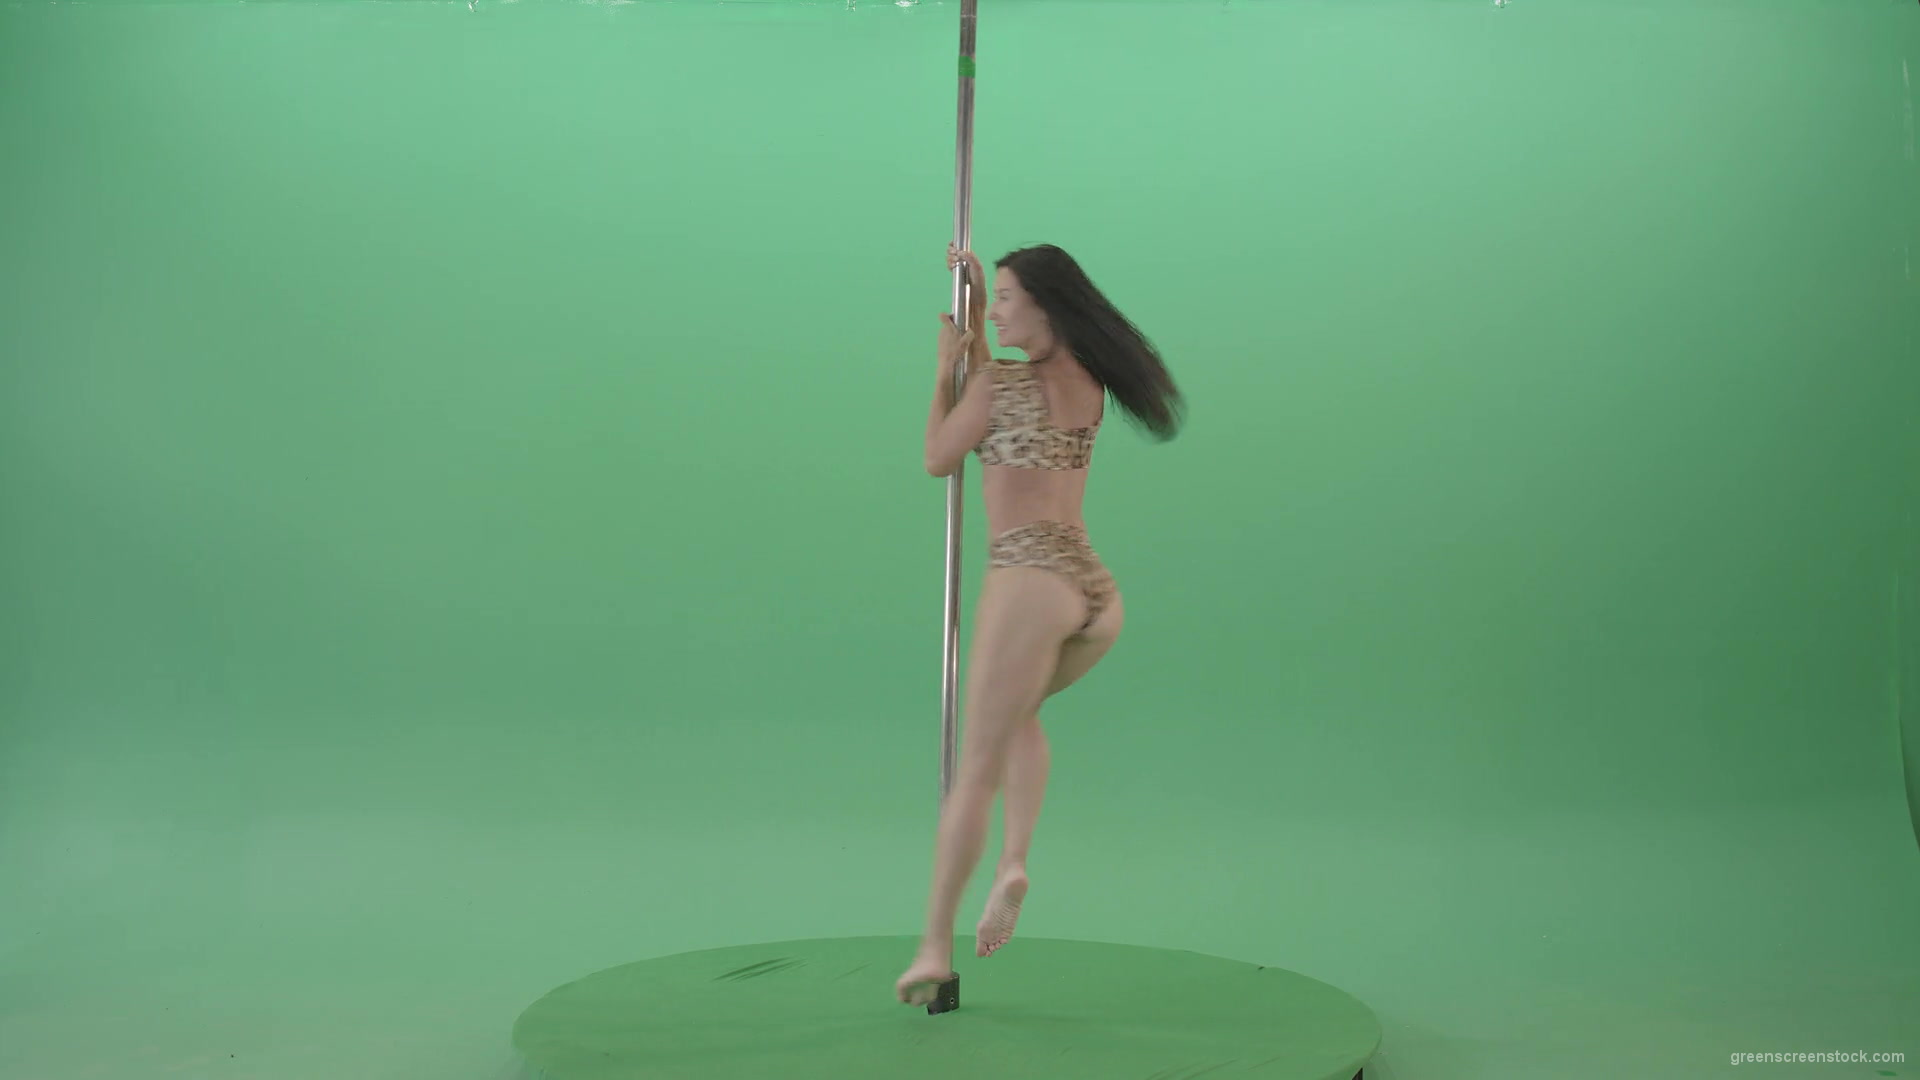 Slim-woman-spinning-in-simple-pose-dancing-pole-dance-in-animal-jaguar-skin-underwear-on-green-screen-4K-Video-Footage-1920_009 Green Screen Stock